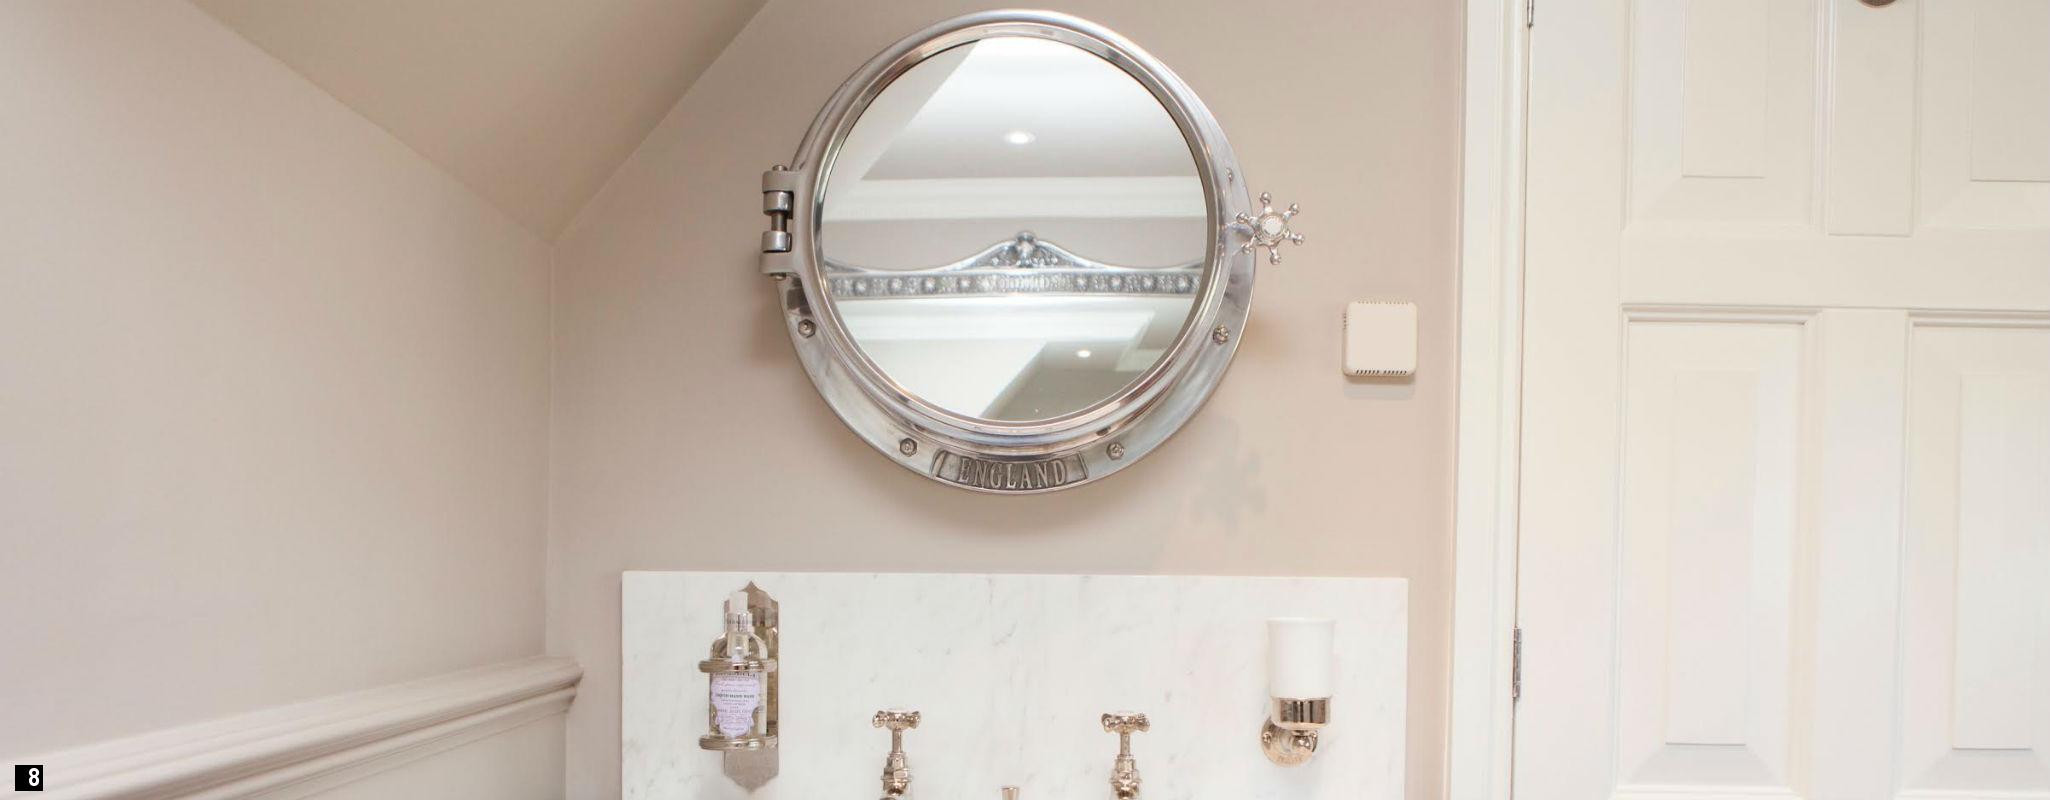 Porthole Bathroom Mirror
 Porthole Mirrors Product Categories